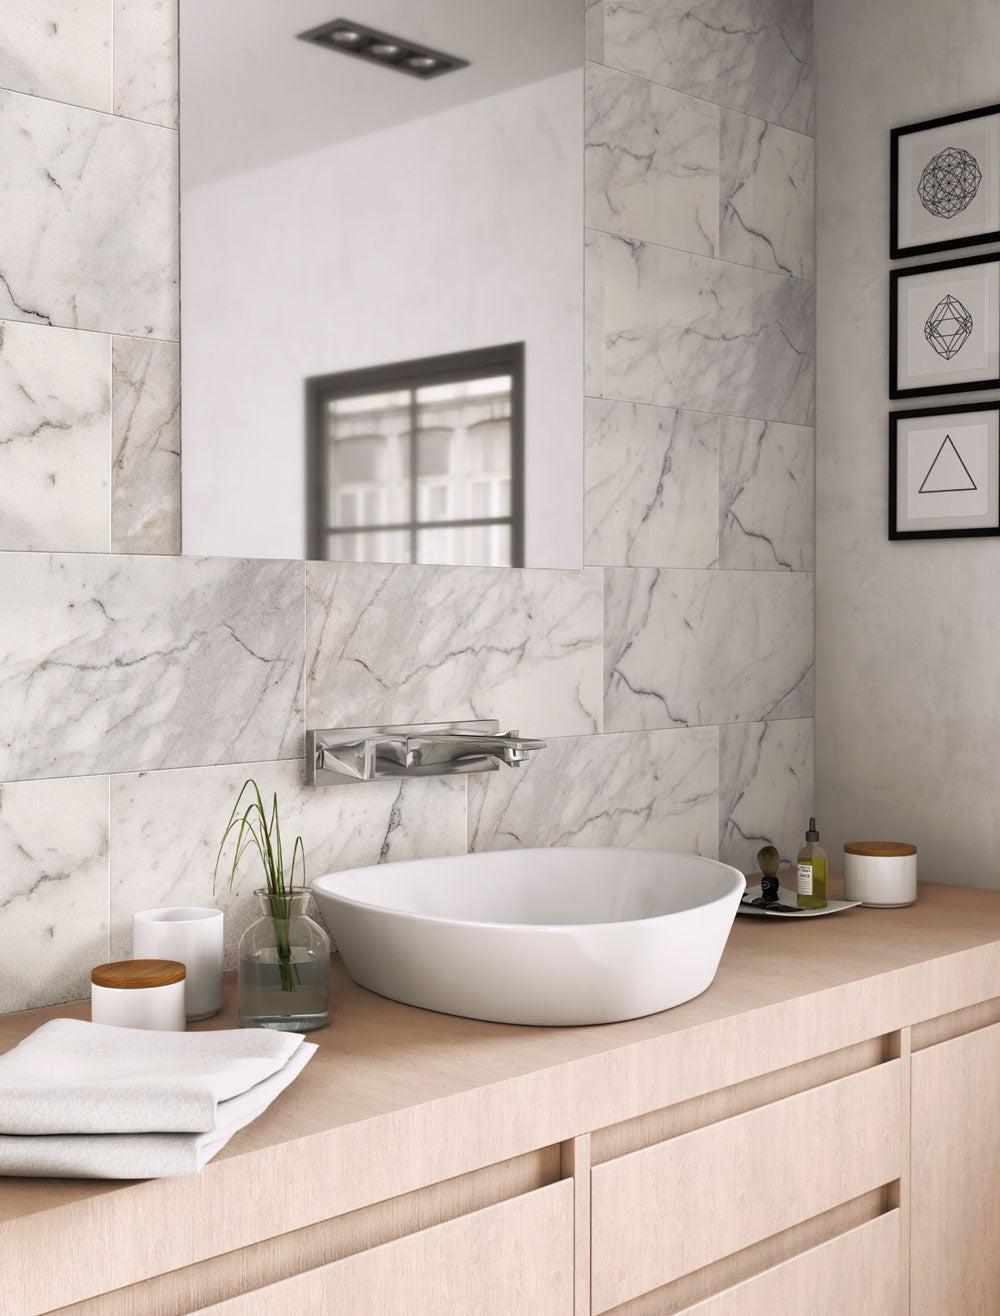 Calacatta Gold honed marble tiles with a minimalist wood bathroom